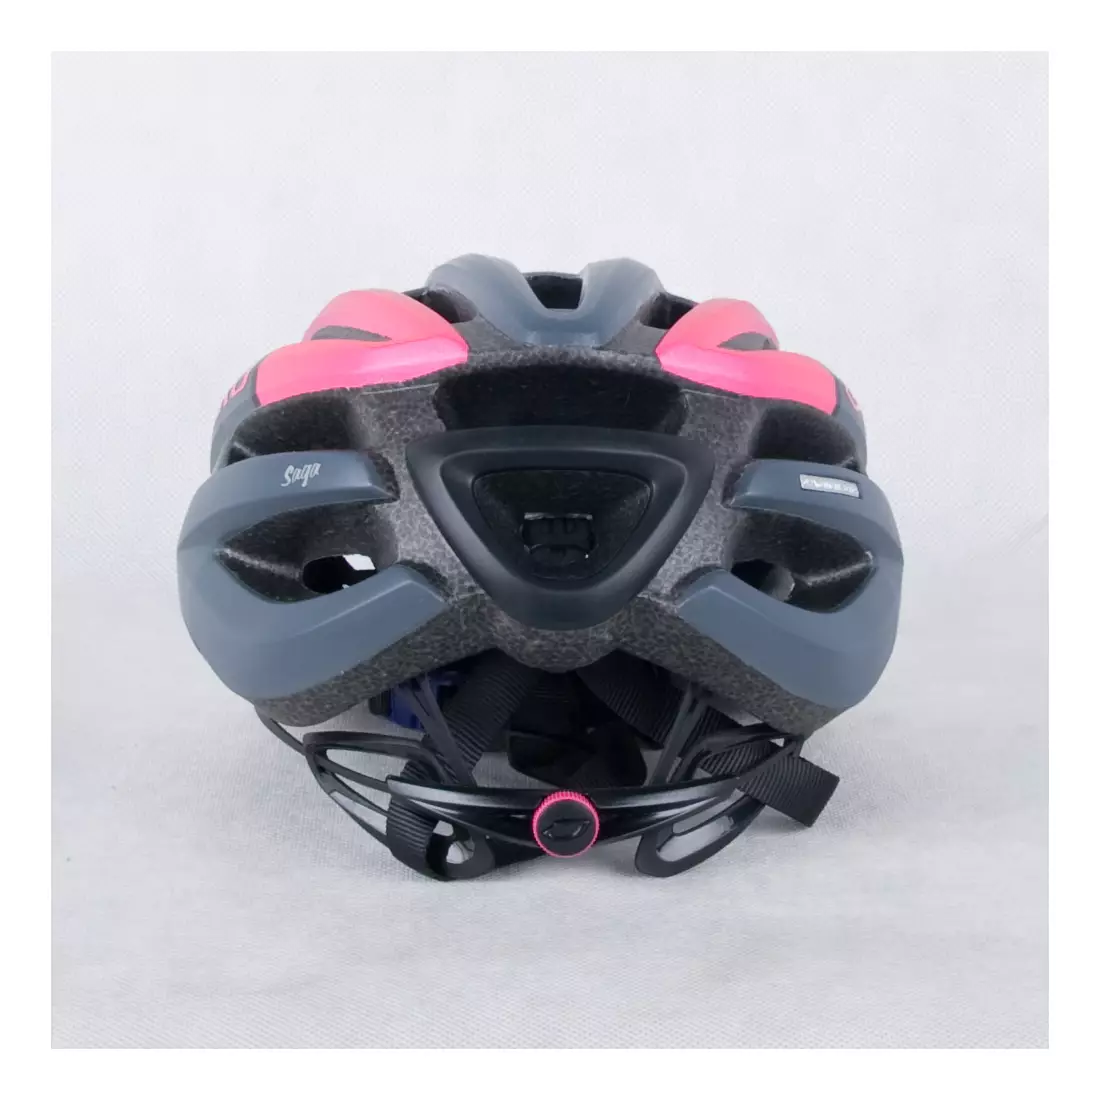 GIRO SAGA - women's bicycle helmet, black and pink